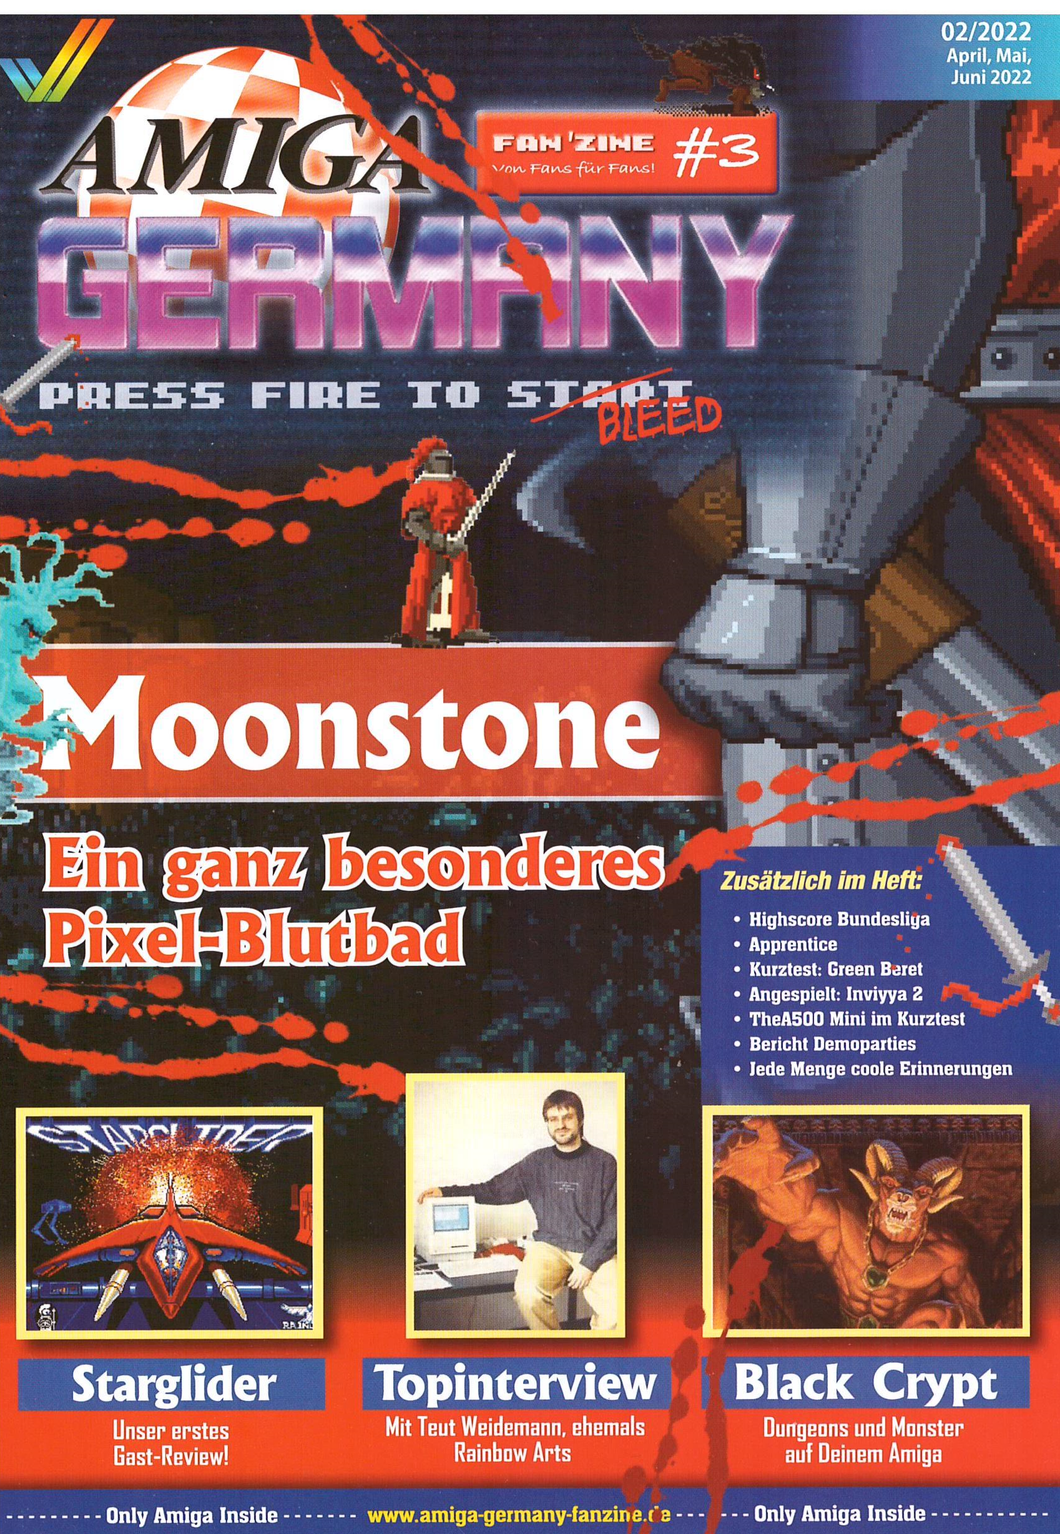 Amiga Germany Fanzine #3